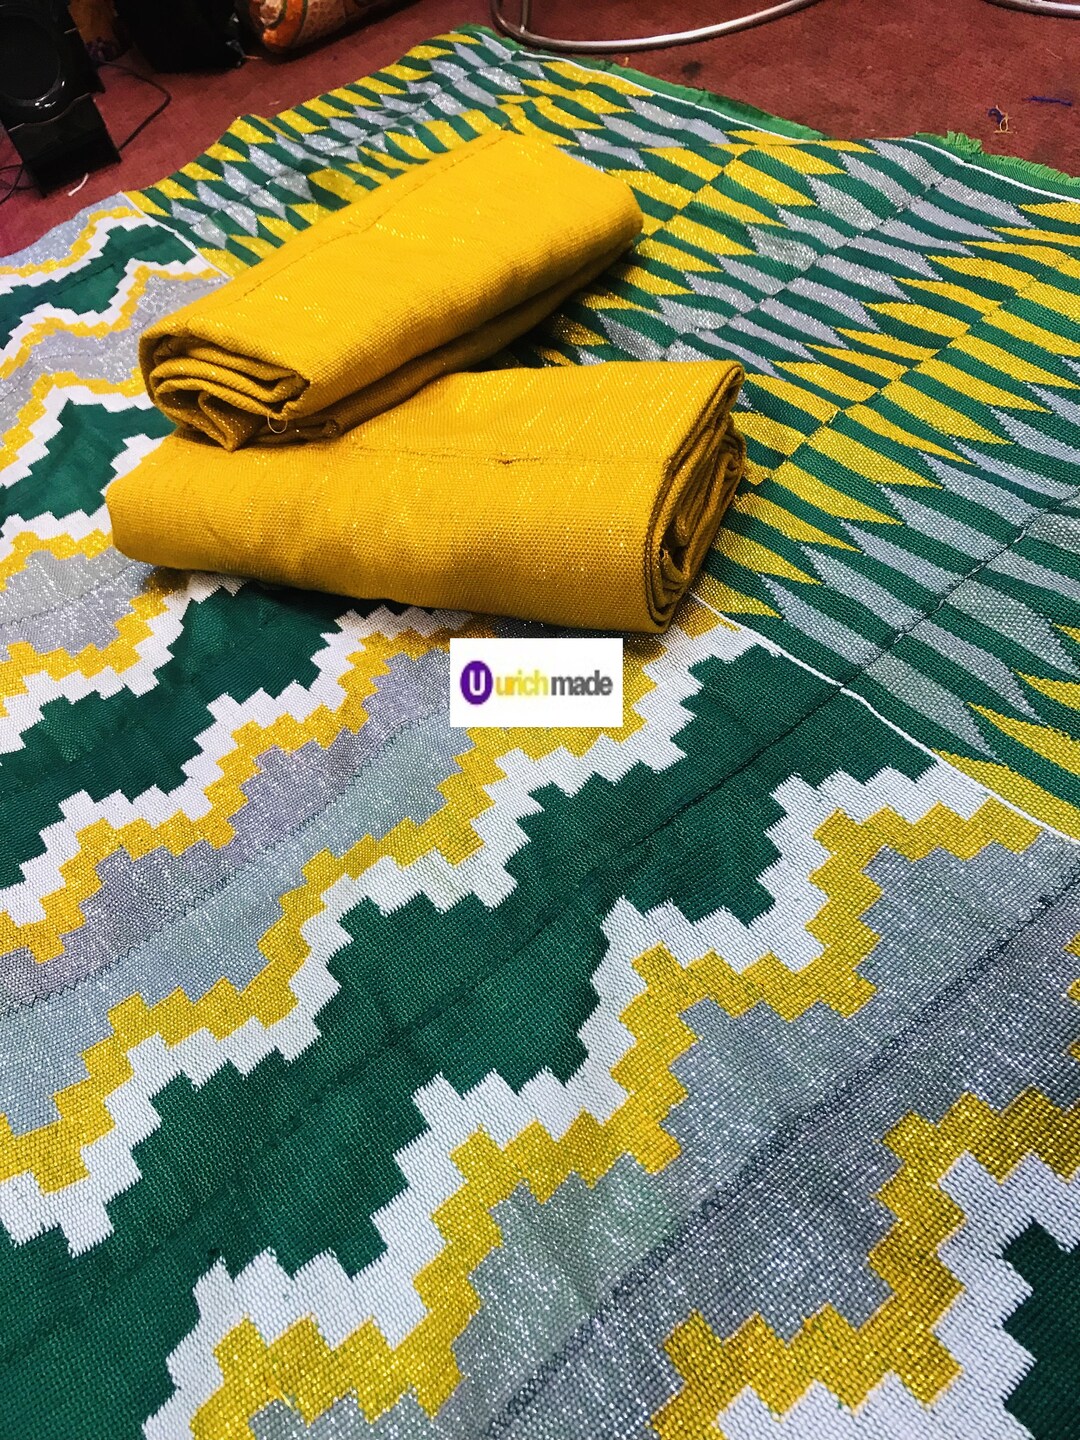 Royal Gold White Authentic Kente 2, 4,6 & 12 yards Ghana handwoven Kente  fabric and Kente Cloth Bonwire Kente African fabric